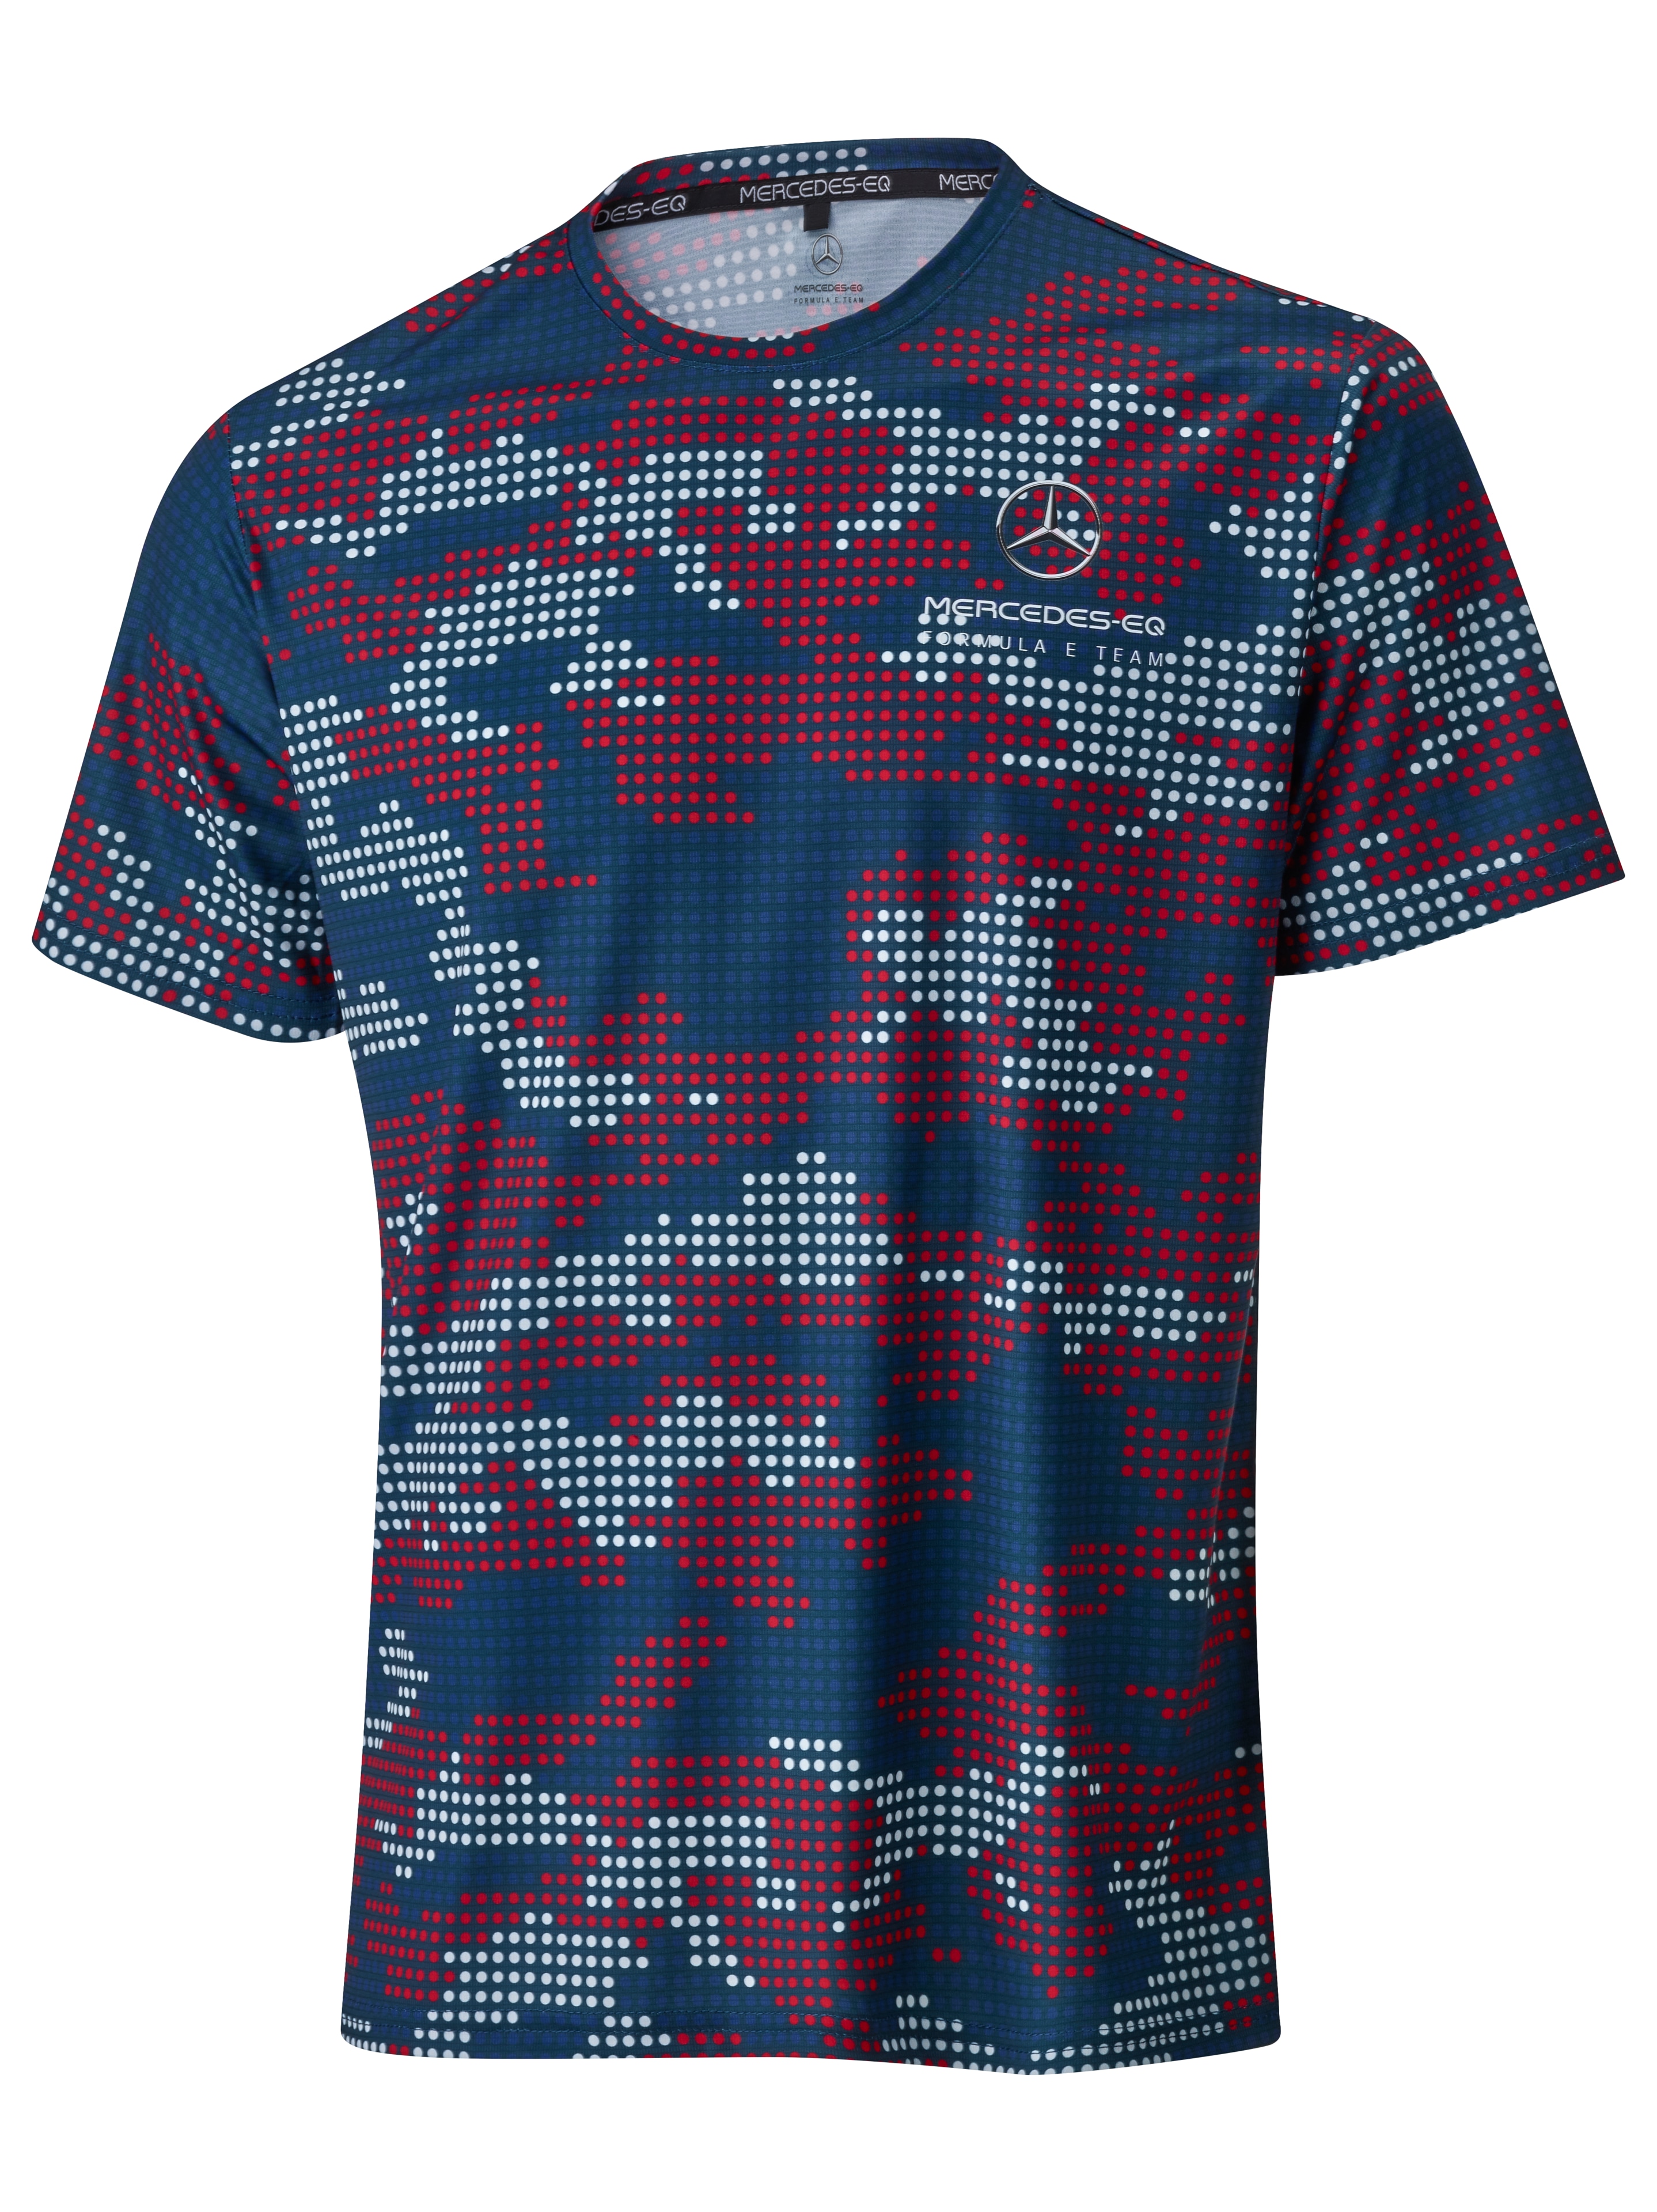 T-Shirt Herren - silberfarben / blau / rot, XXL